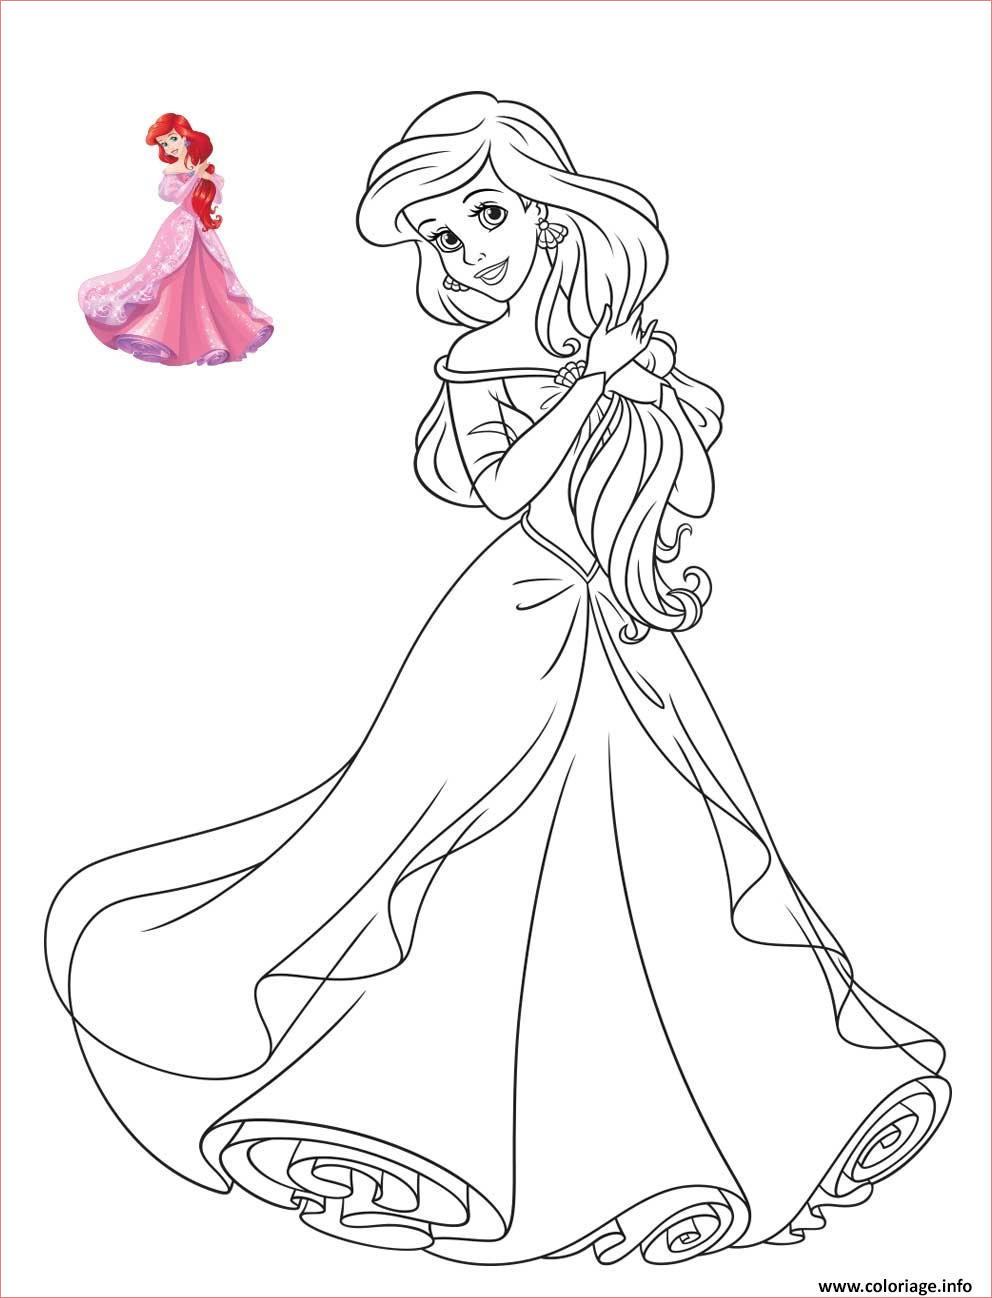 Coloriage Princesses Génial Coloriage Princesse Disney